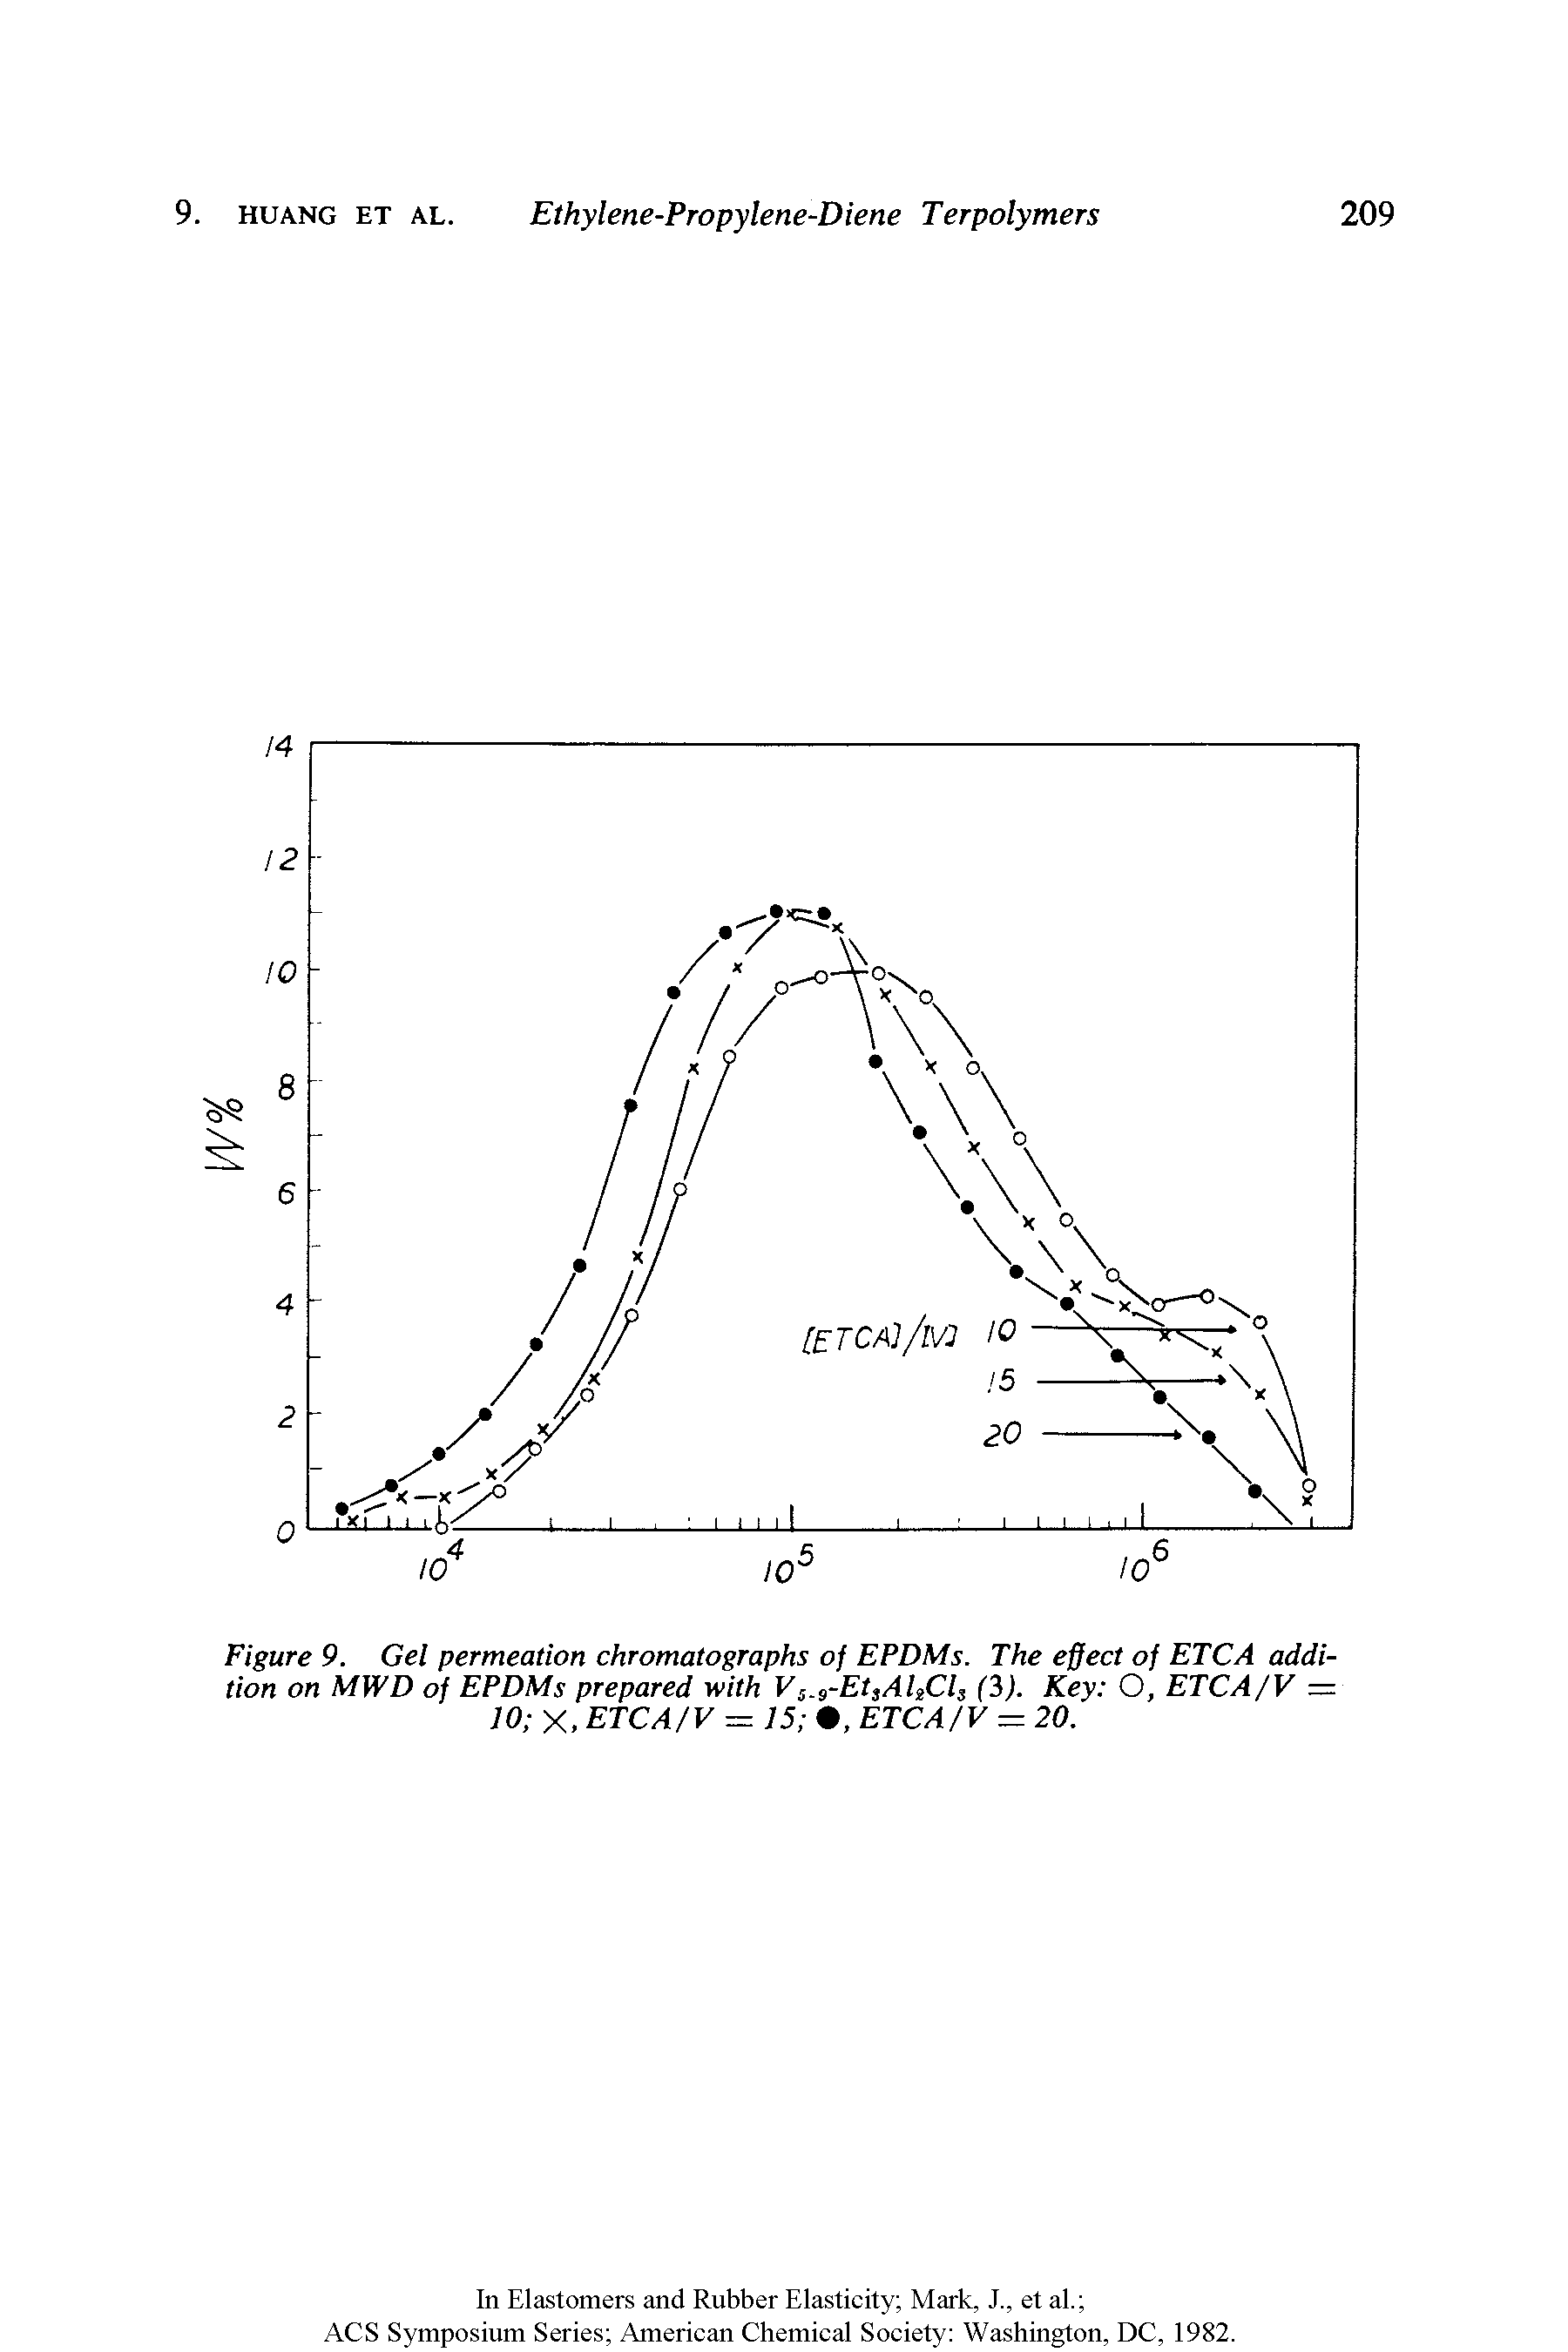 Figure 9. Gel permeation chromatographs of EPDMs. The effect of ETCA addition on MWD of EPDMs prepared with Vs.s-Et3AliCl3 (3). Key O, ETCA/V = 10 X, ETCA/V = 15 , ETCA/V = 20.